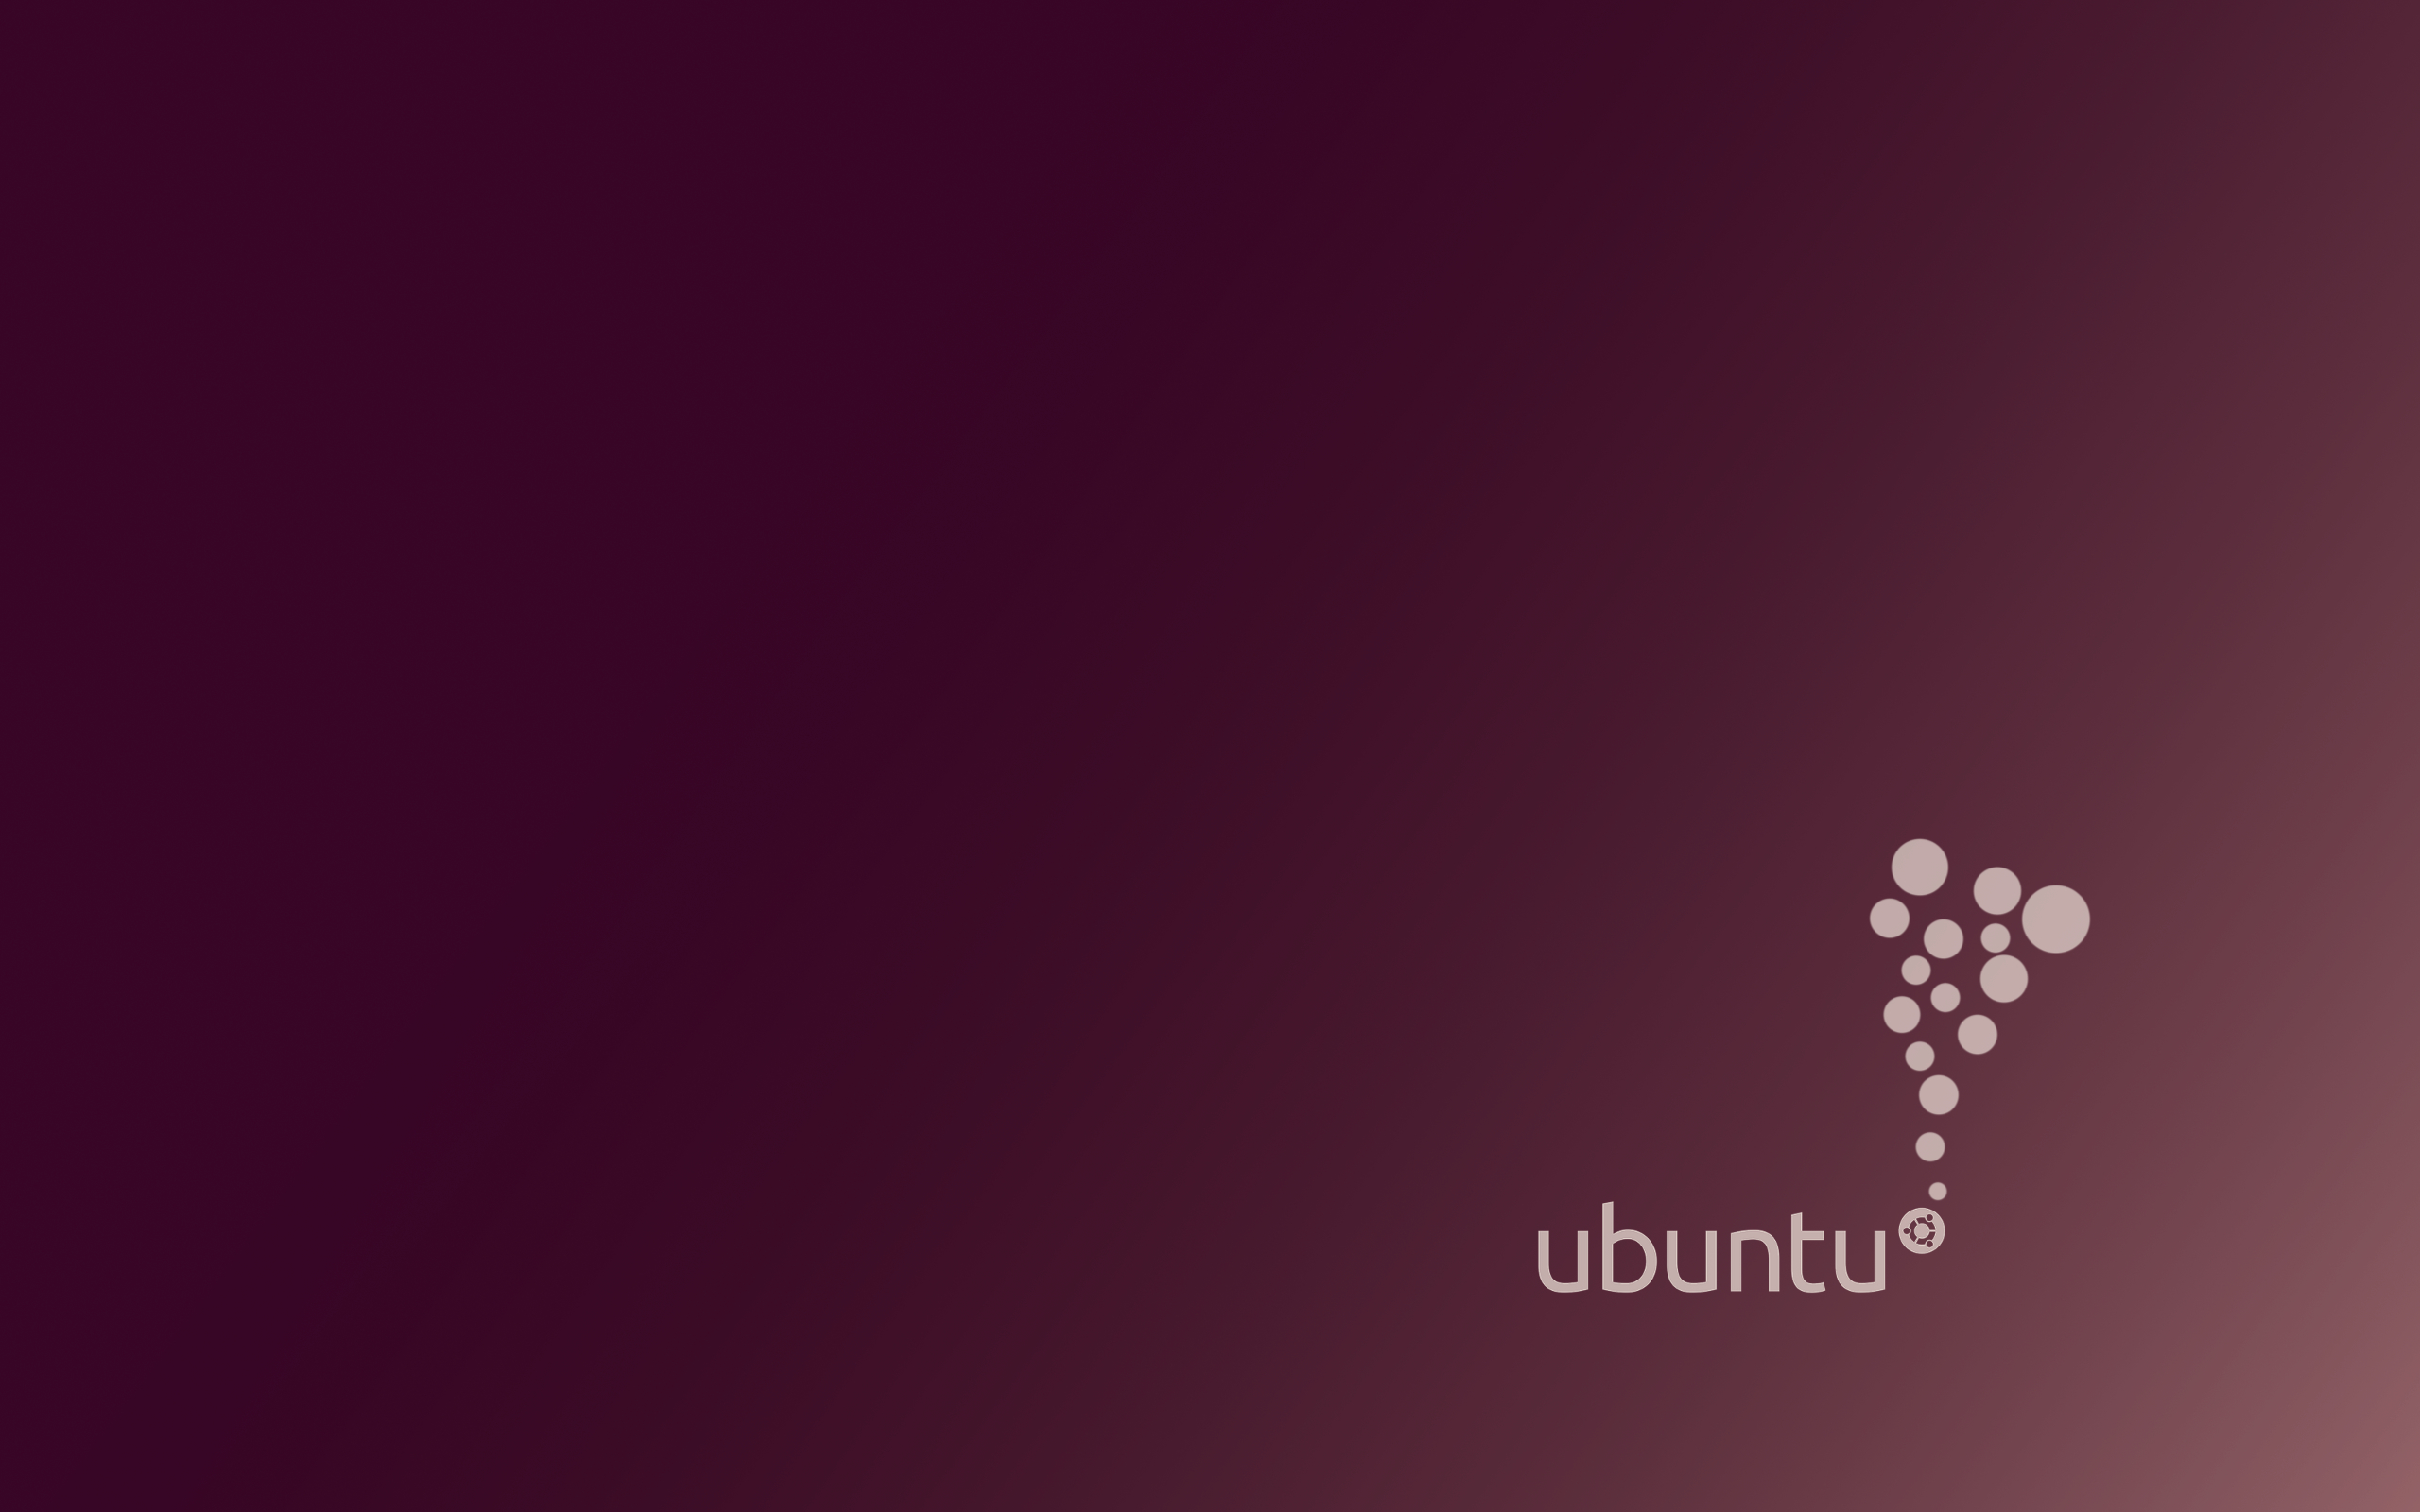 Desktop Wallpaper Linux on Linux Ubuntu Software Hd Wallpaper   Computer   Systems   581642